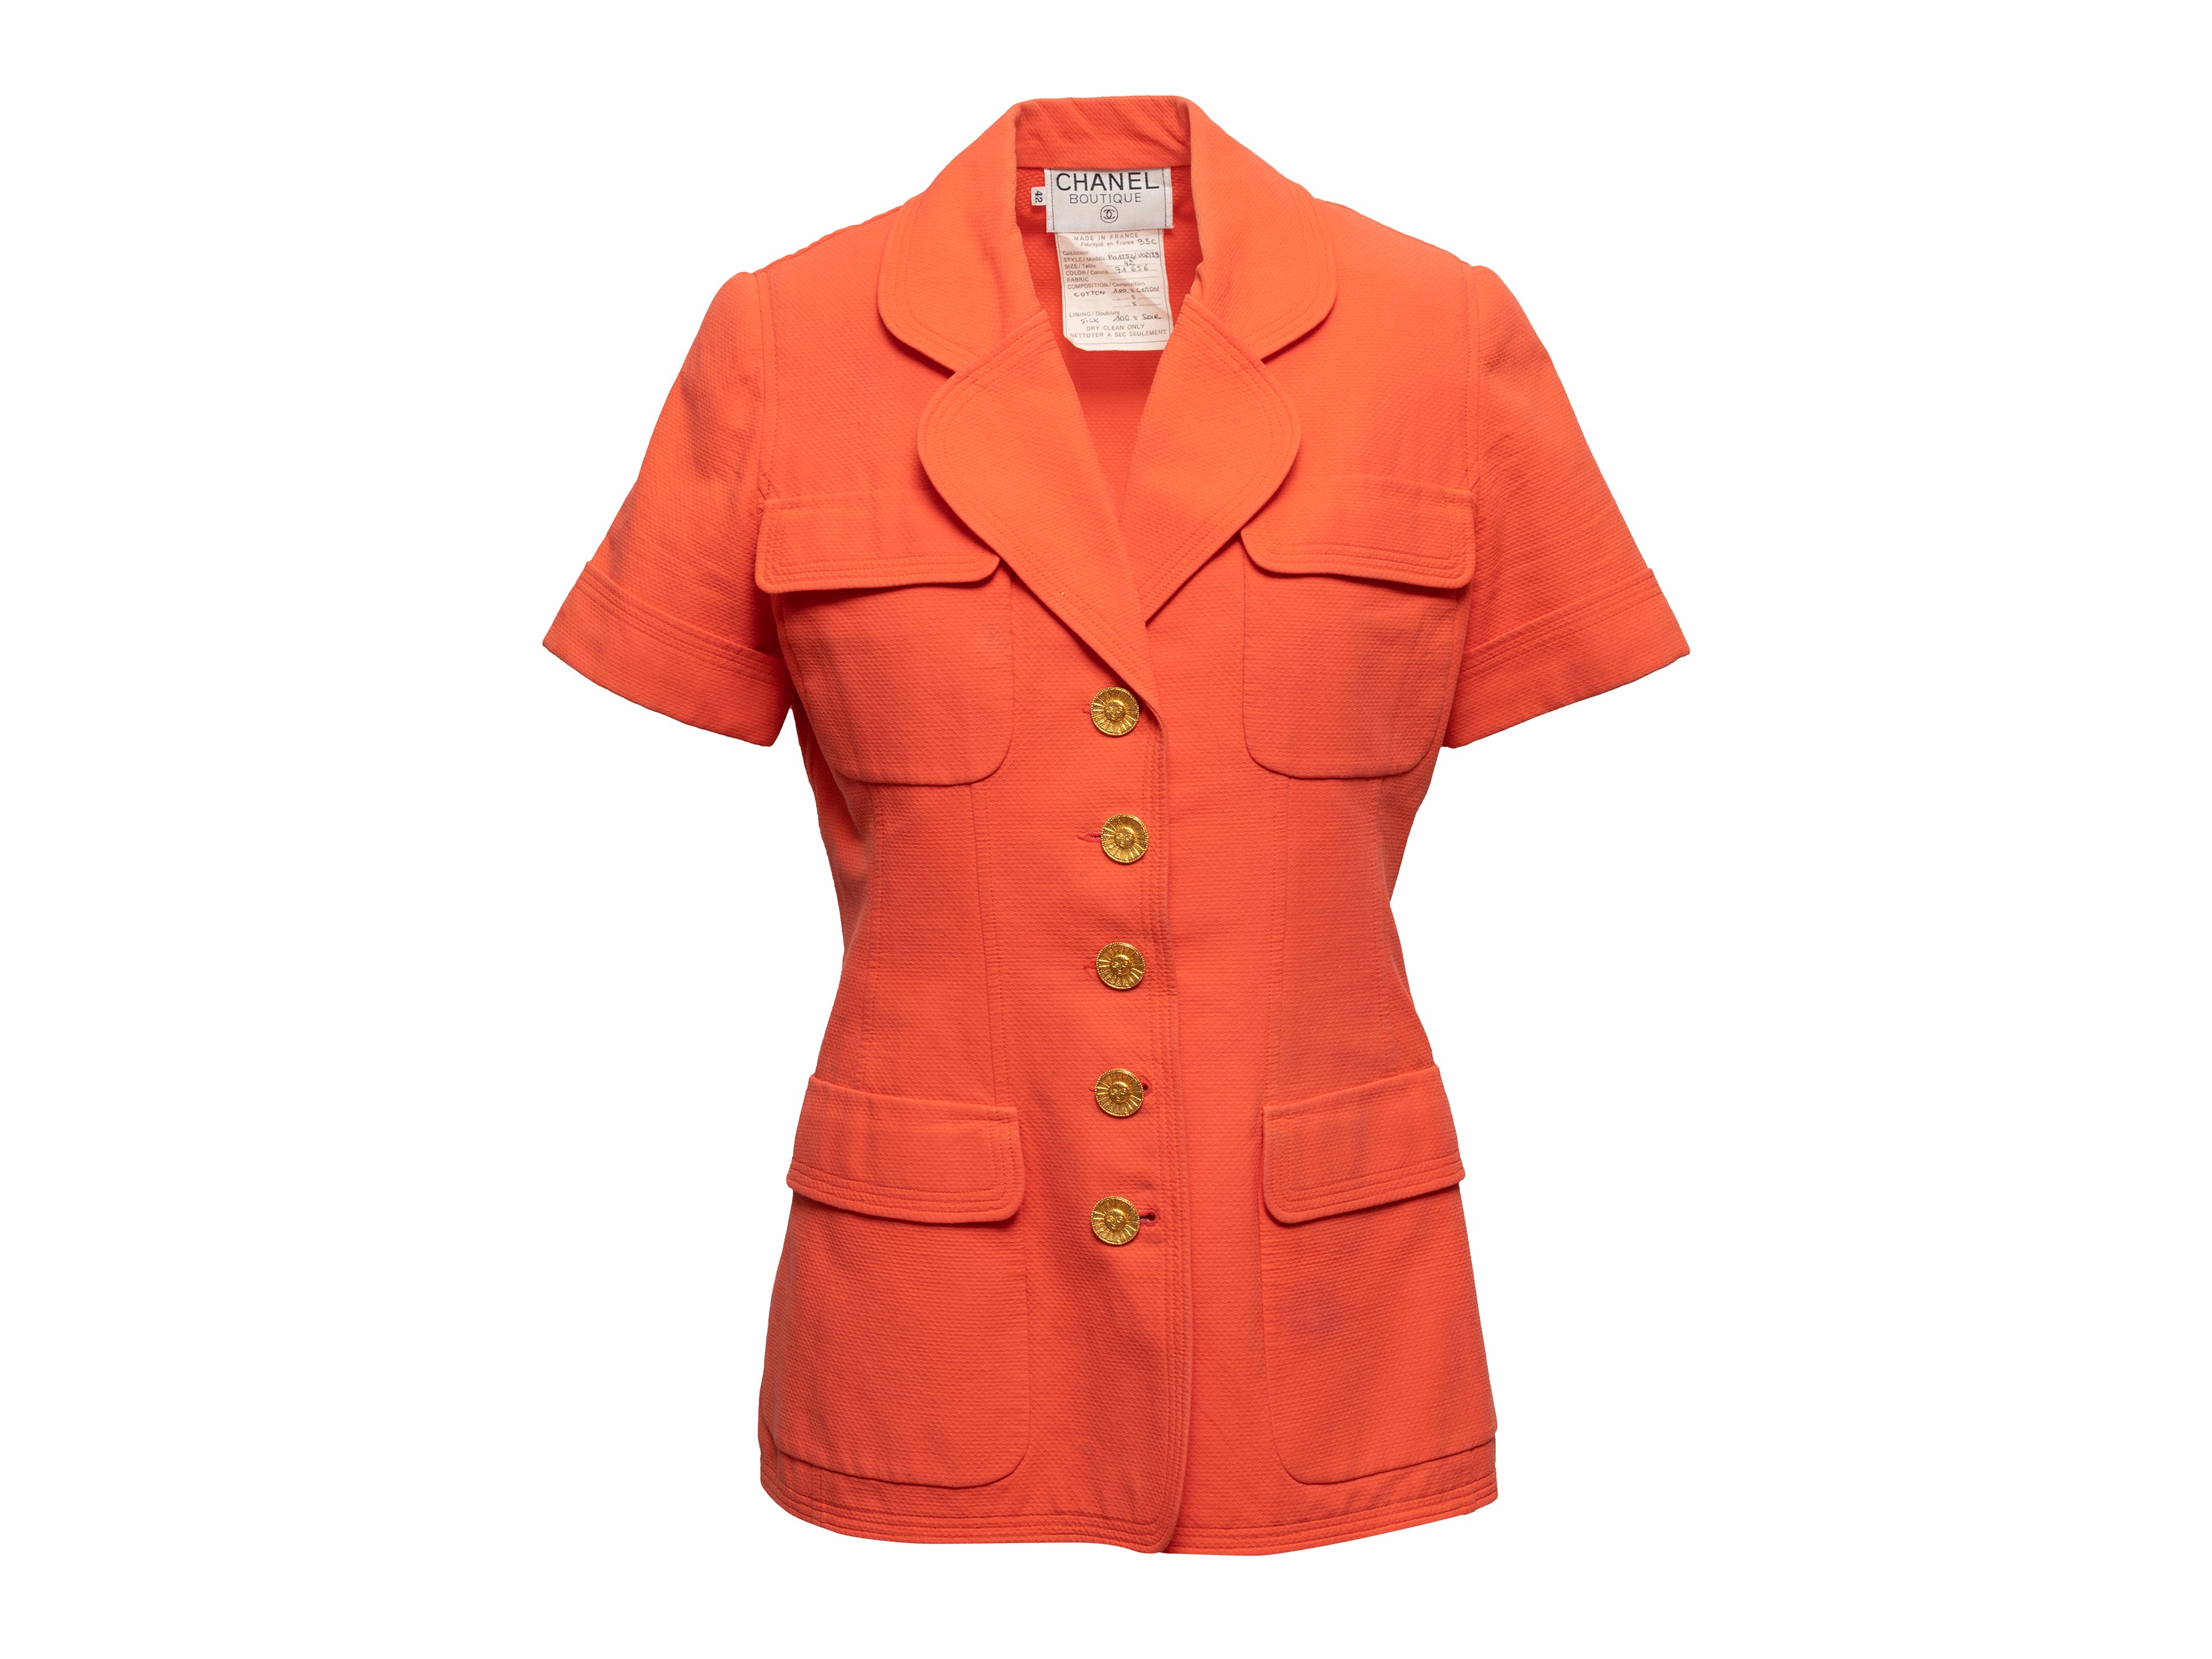 Vintage Orange Chanel Boutique Short Sleeve Blazer Size EU 42